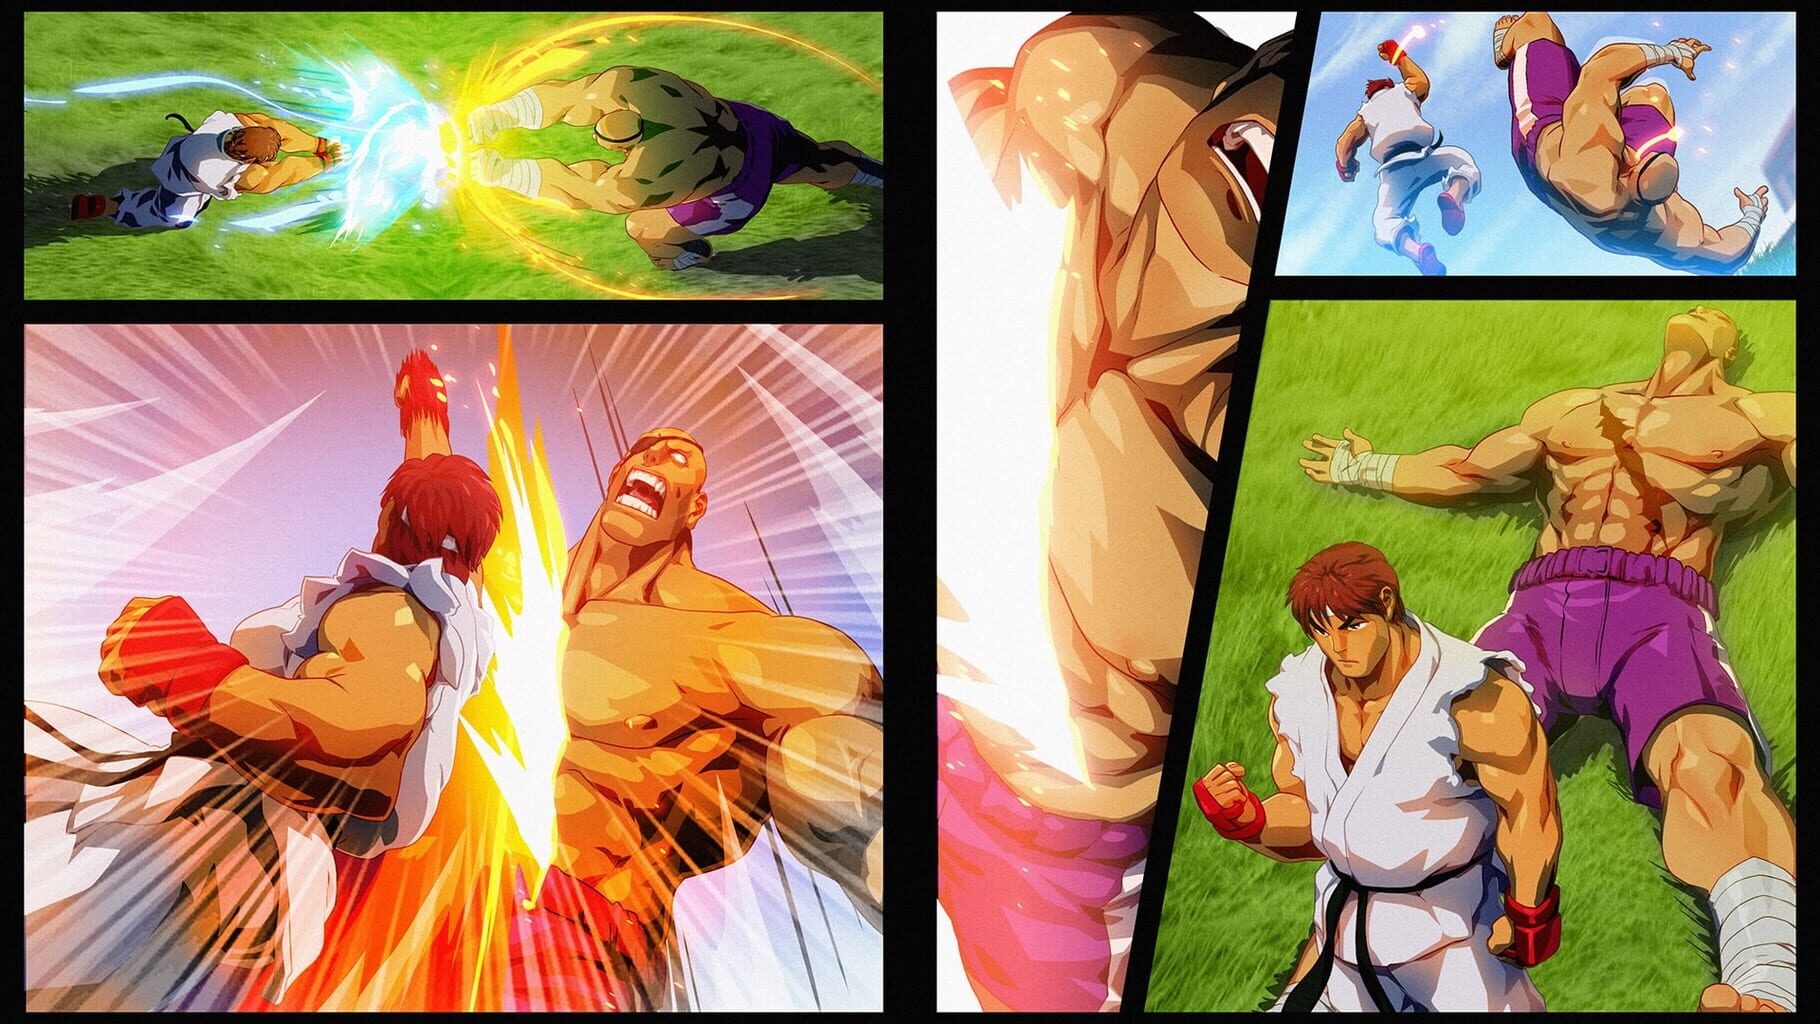 Screenshot for Street Fighter V: Arcade Edition